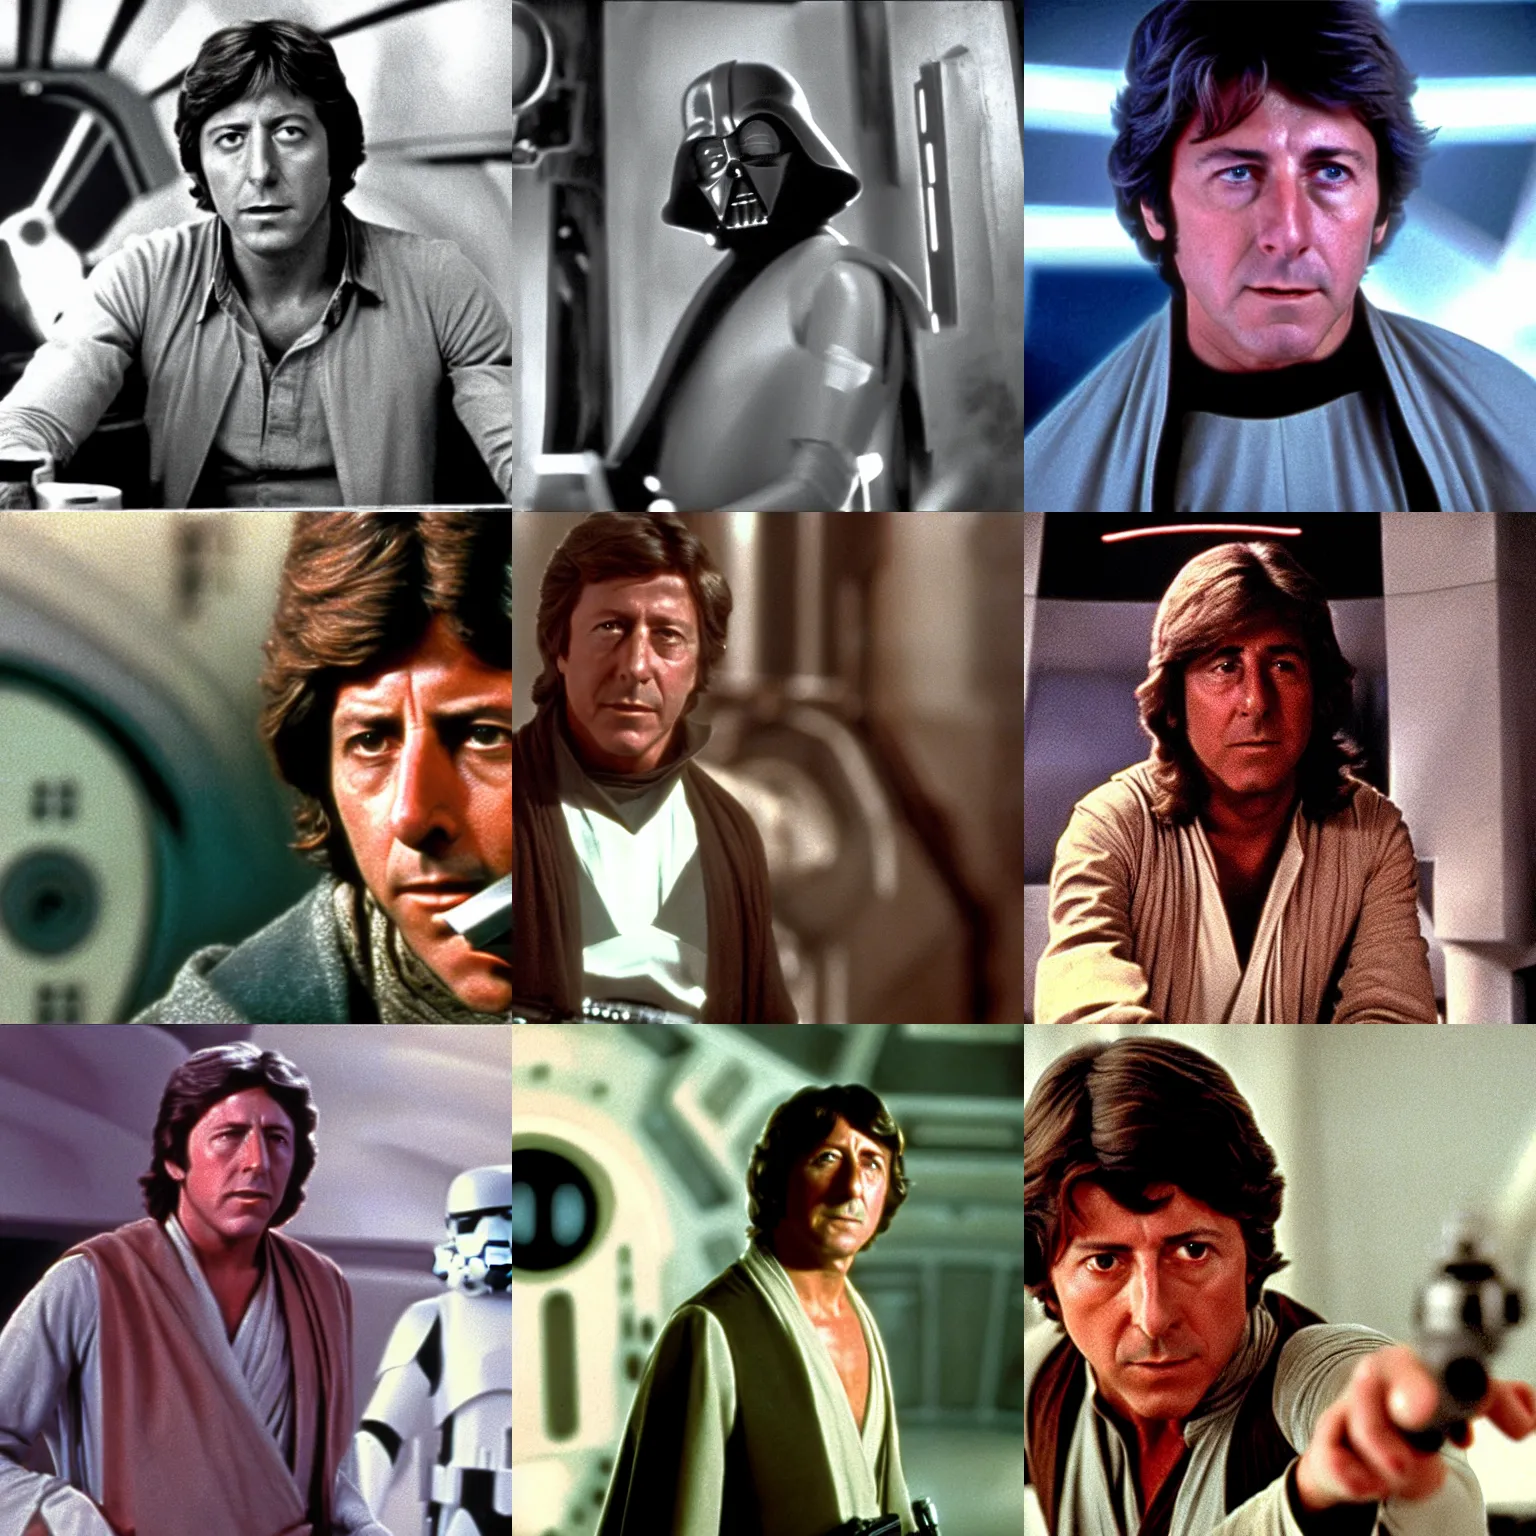 Prompt: A still of Dustin Hoffman in Star Wars, 35mm film, 1977